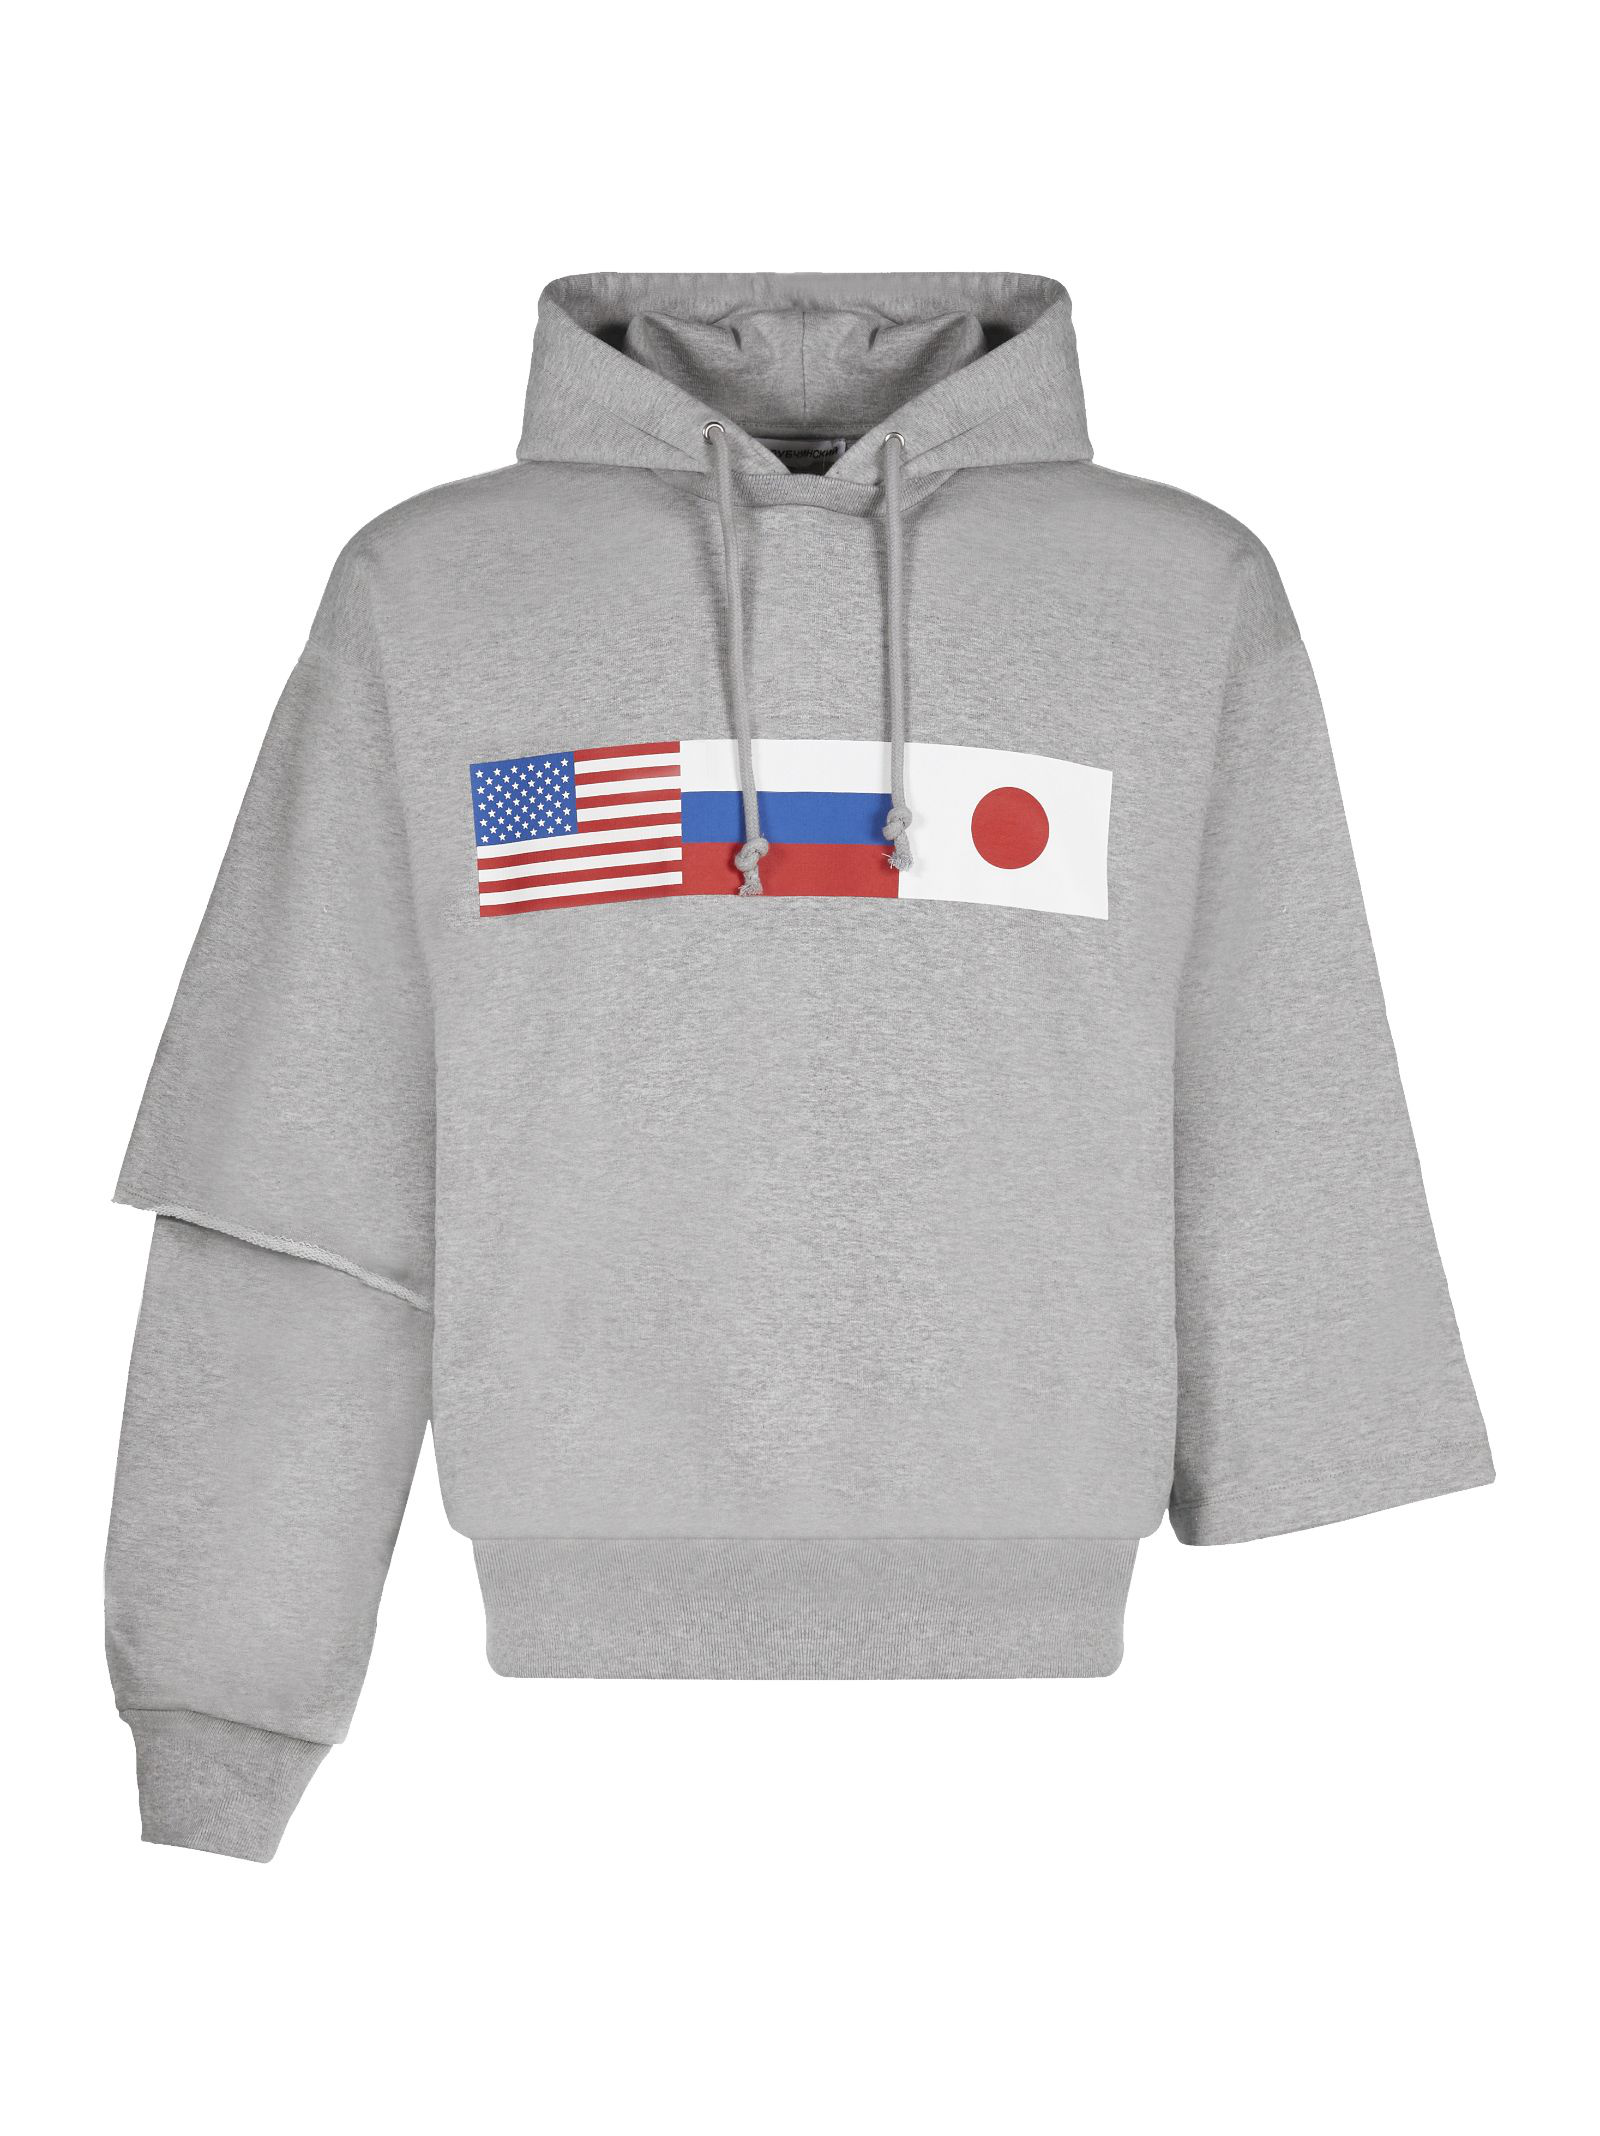 gosha rubchinskiy flag sweatshirt